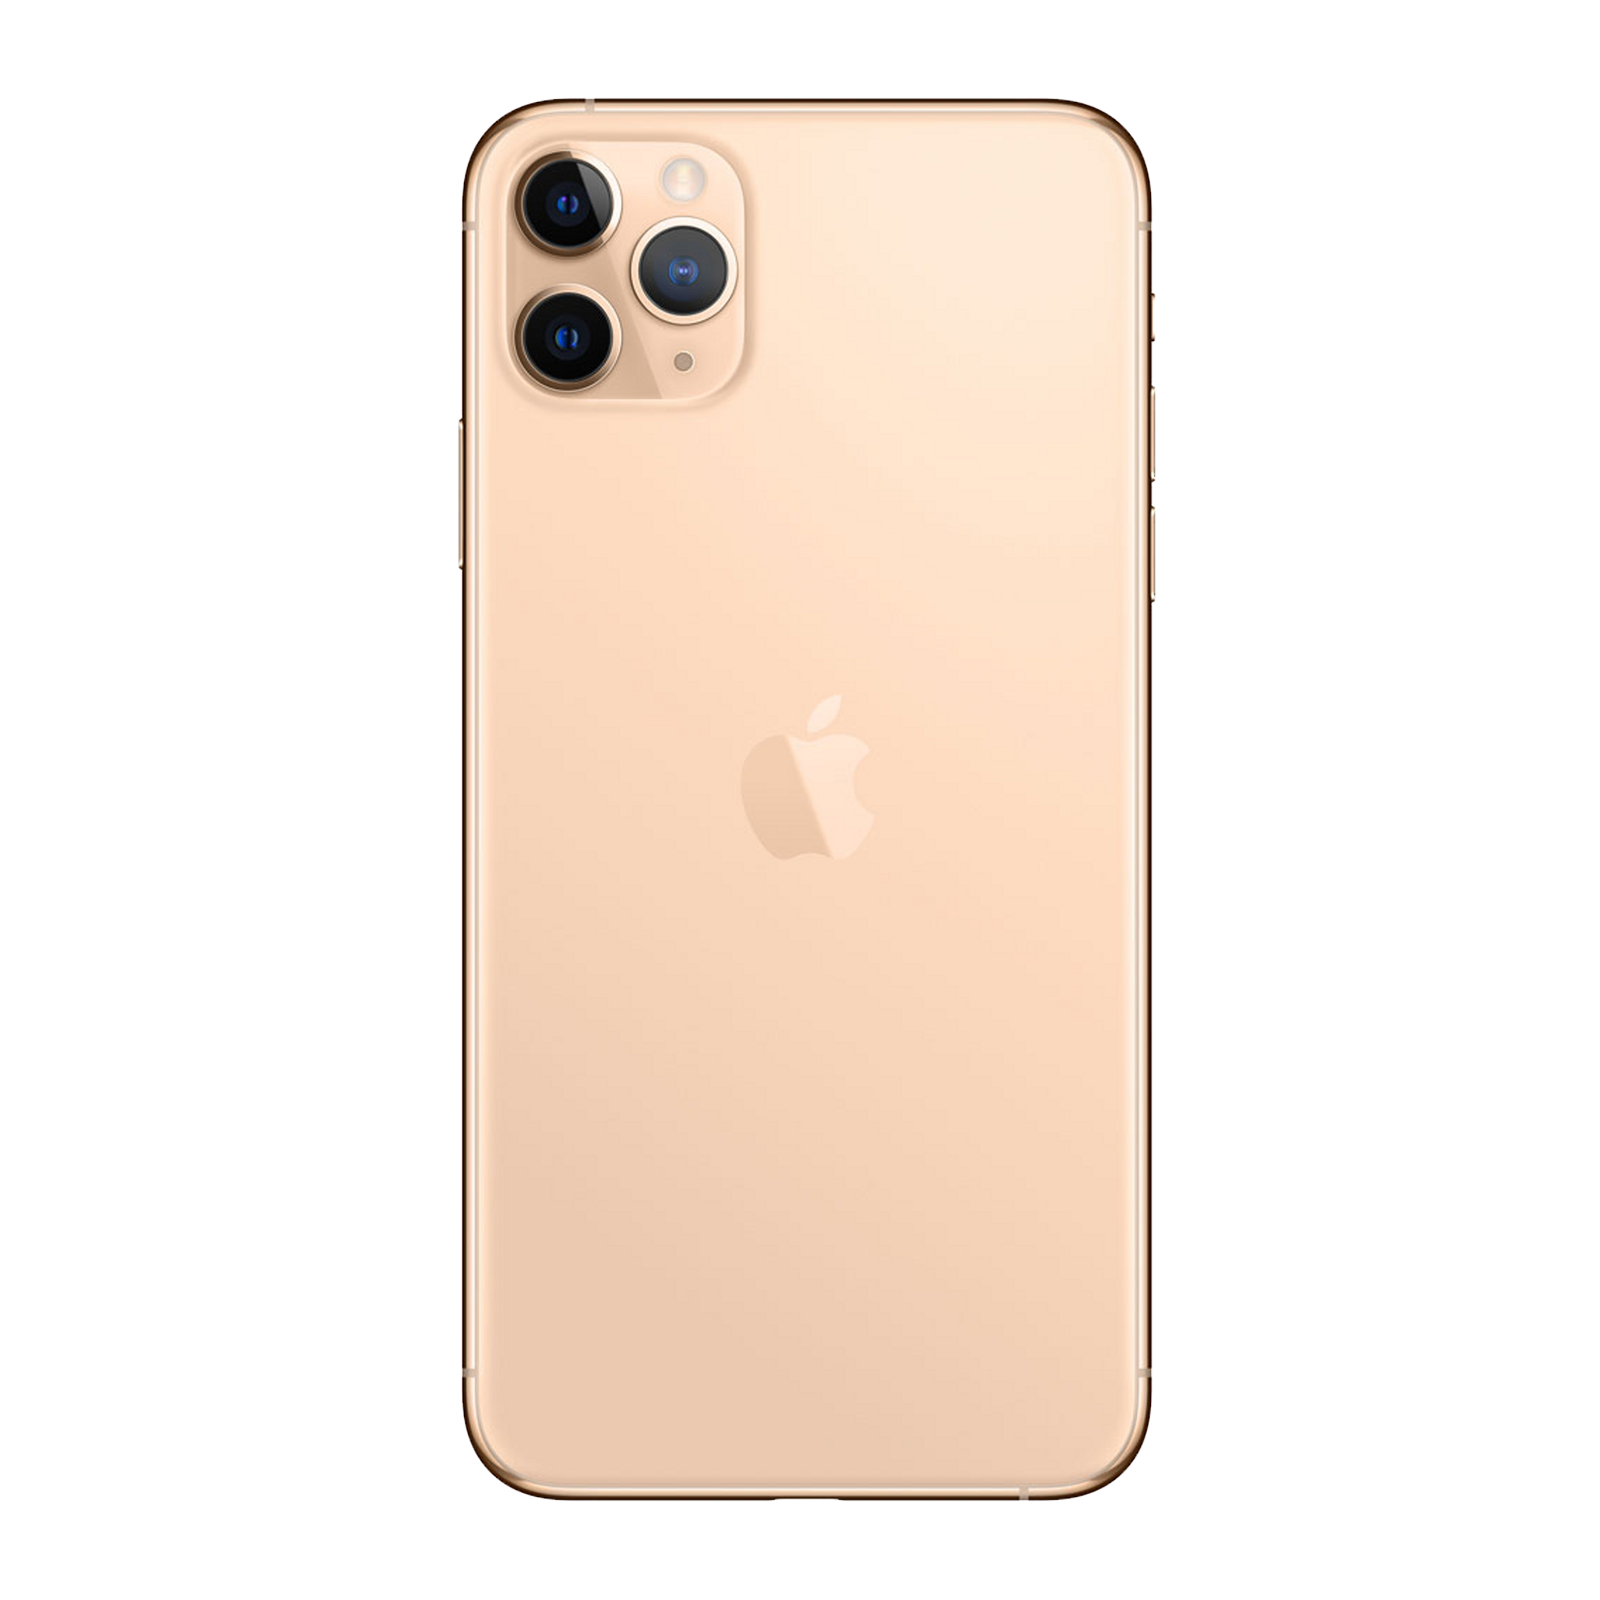 Apple iPhone 11 Pro 256GB Gold Very Good Unlocked – Loop Mobile - US